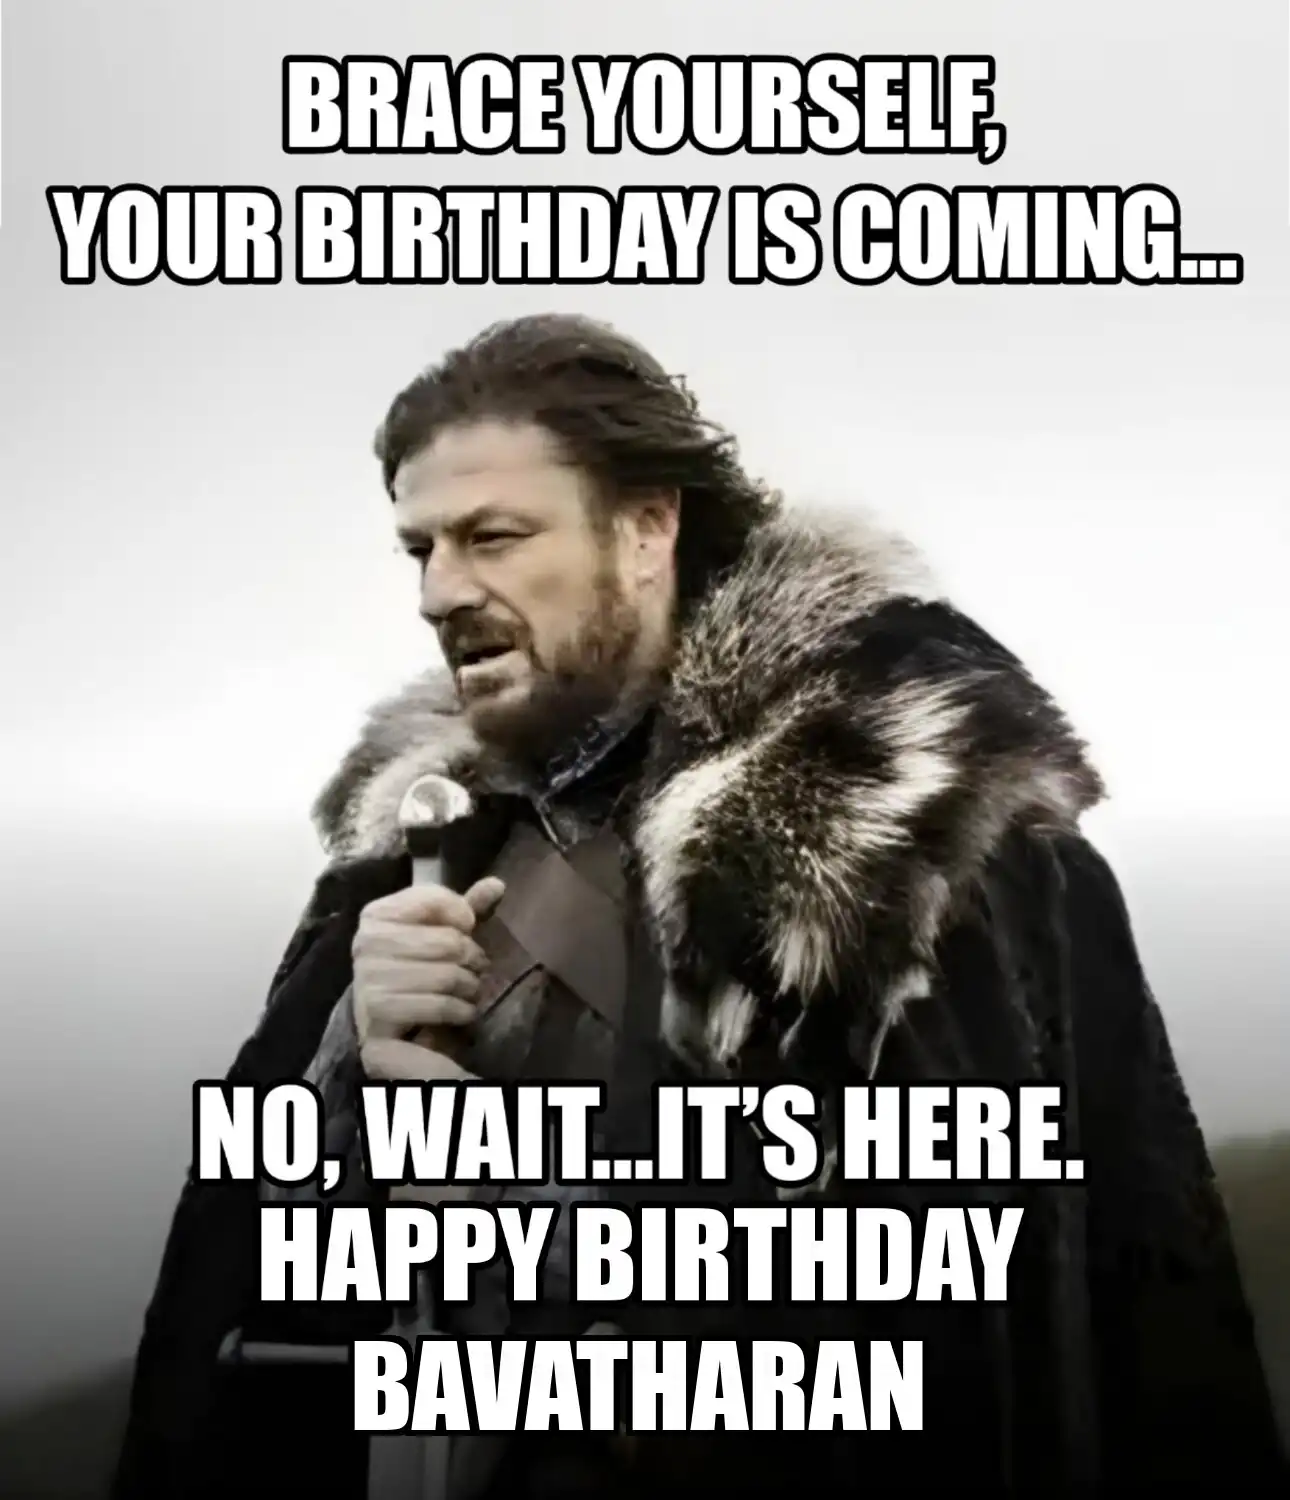 Happy Birthday Bavatharan Brace Yourself Your Birthday Is Coming Meme